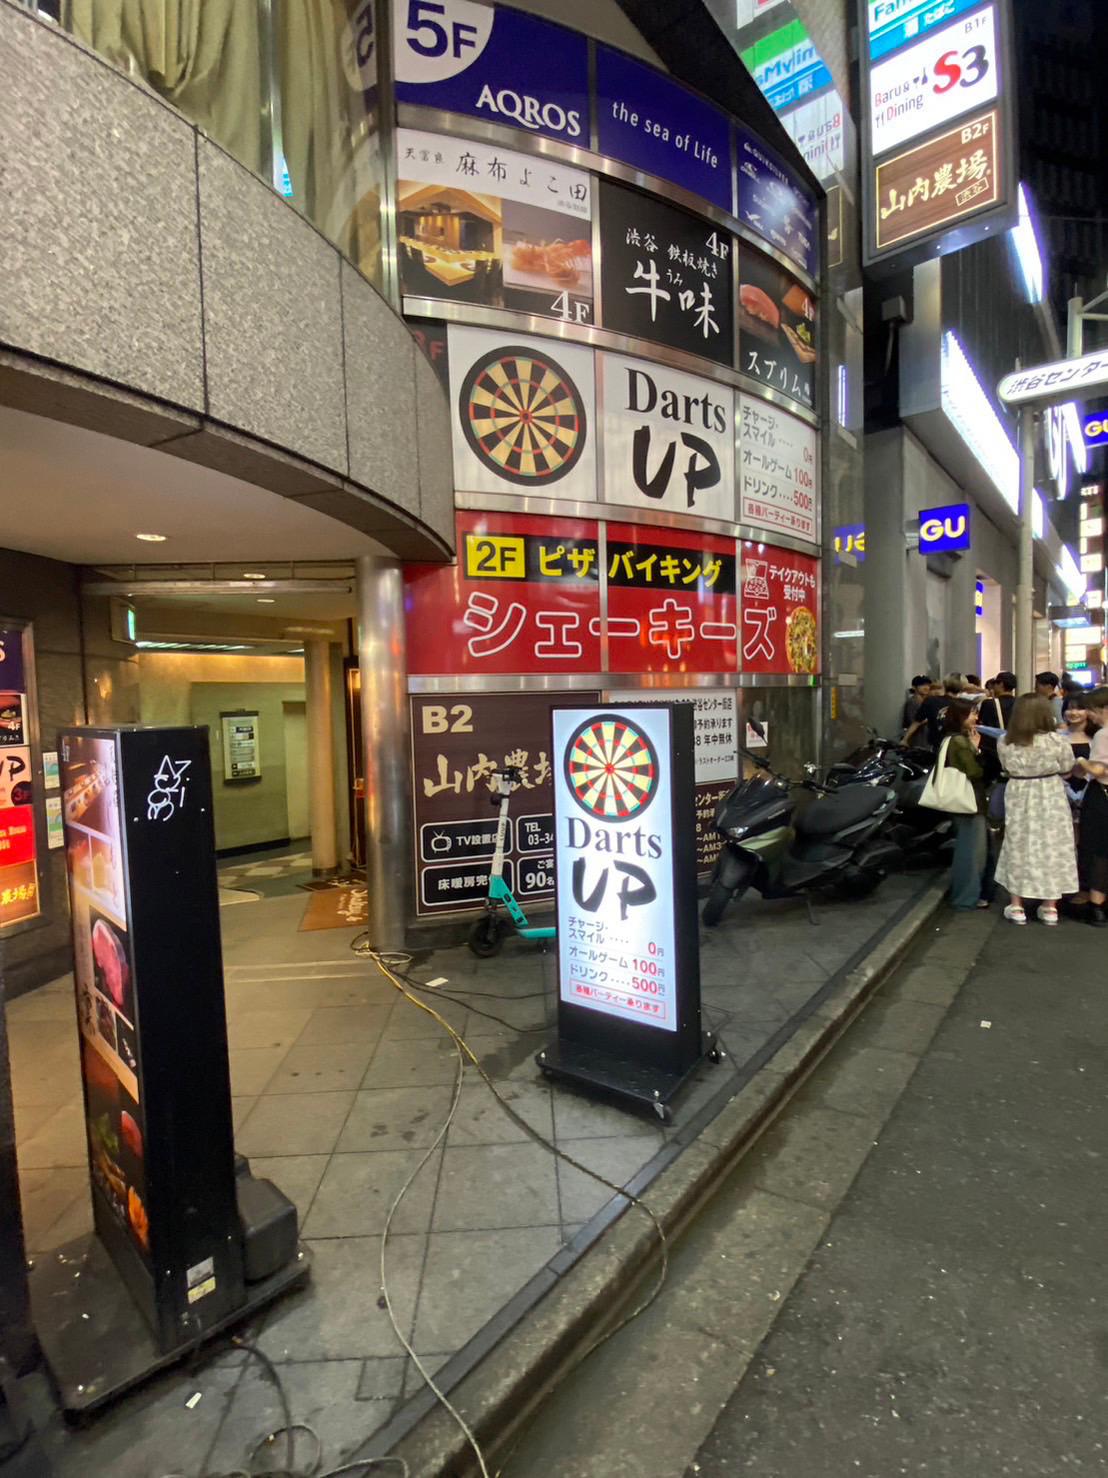 Images DartsUP 渋谷センター街2号店